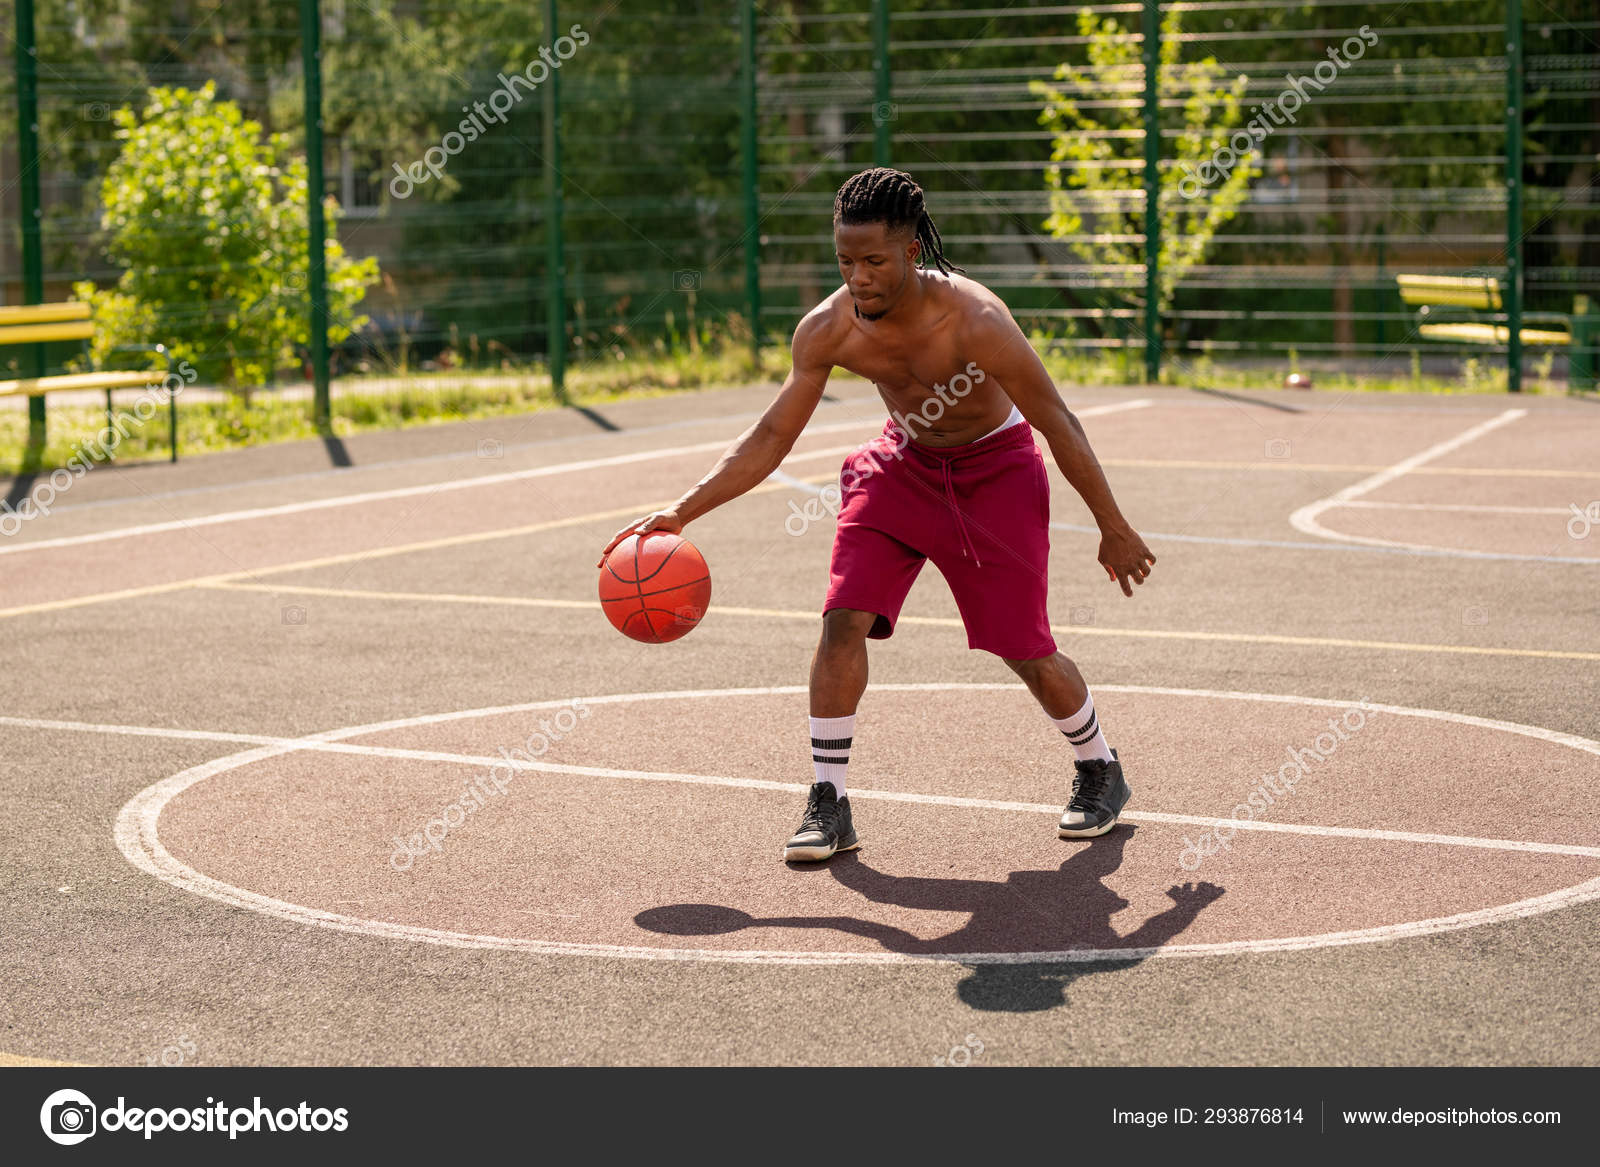 Basketball player - Playground